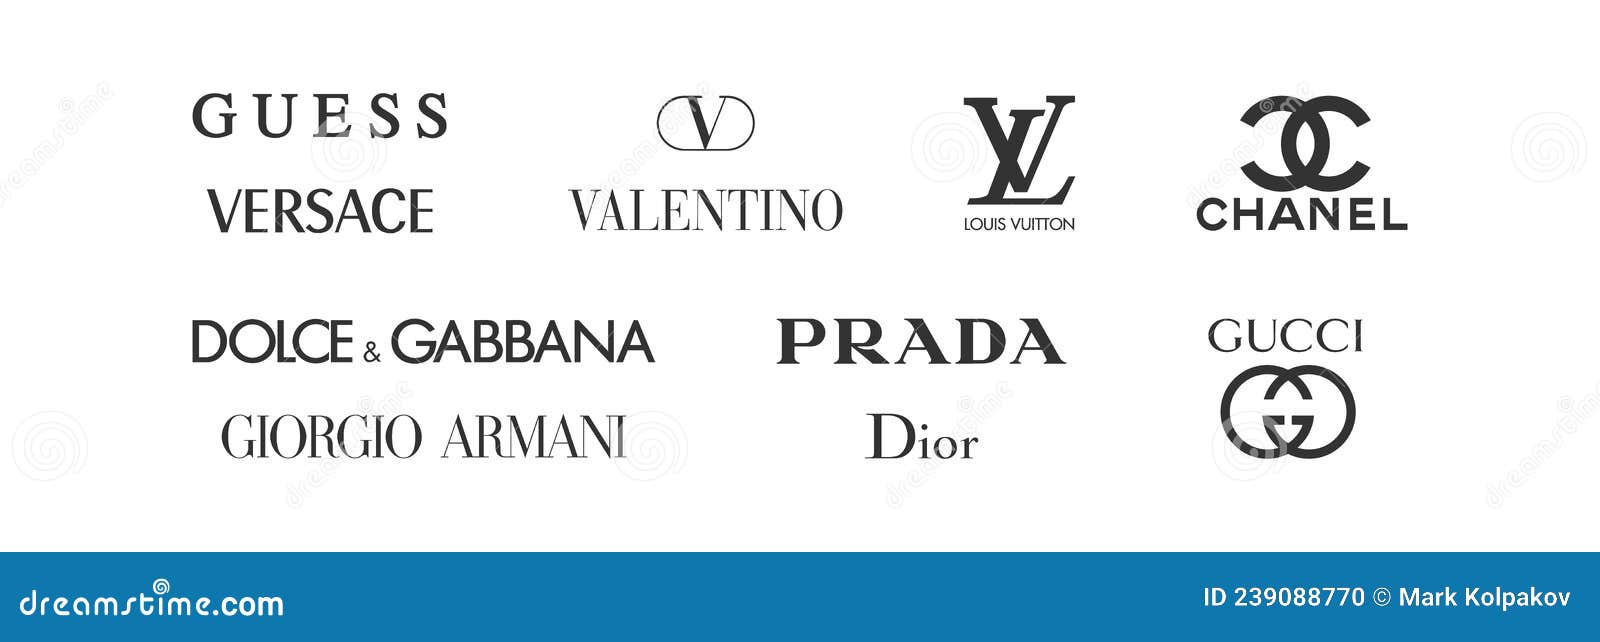 Prada Logo Stock Illustrations – 71 Prada Logo Stock Illustrations, Vectors  & Clipart - Dreamstime